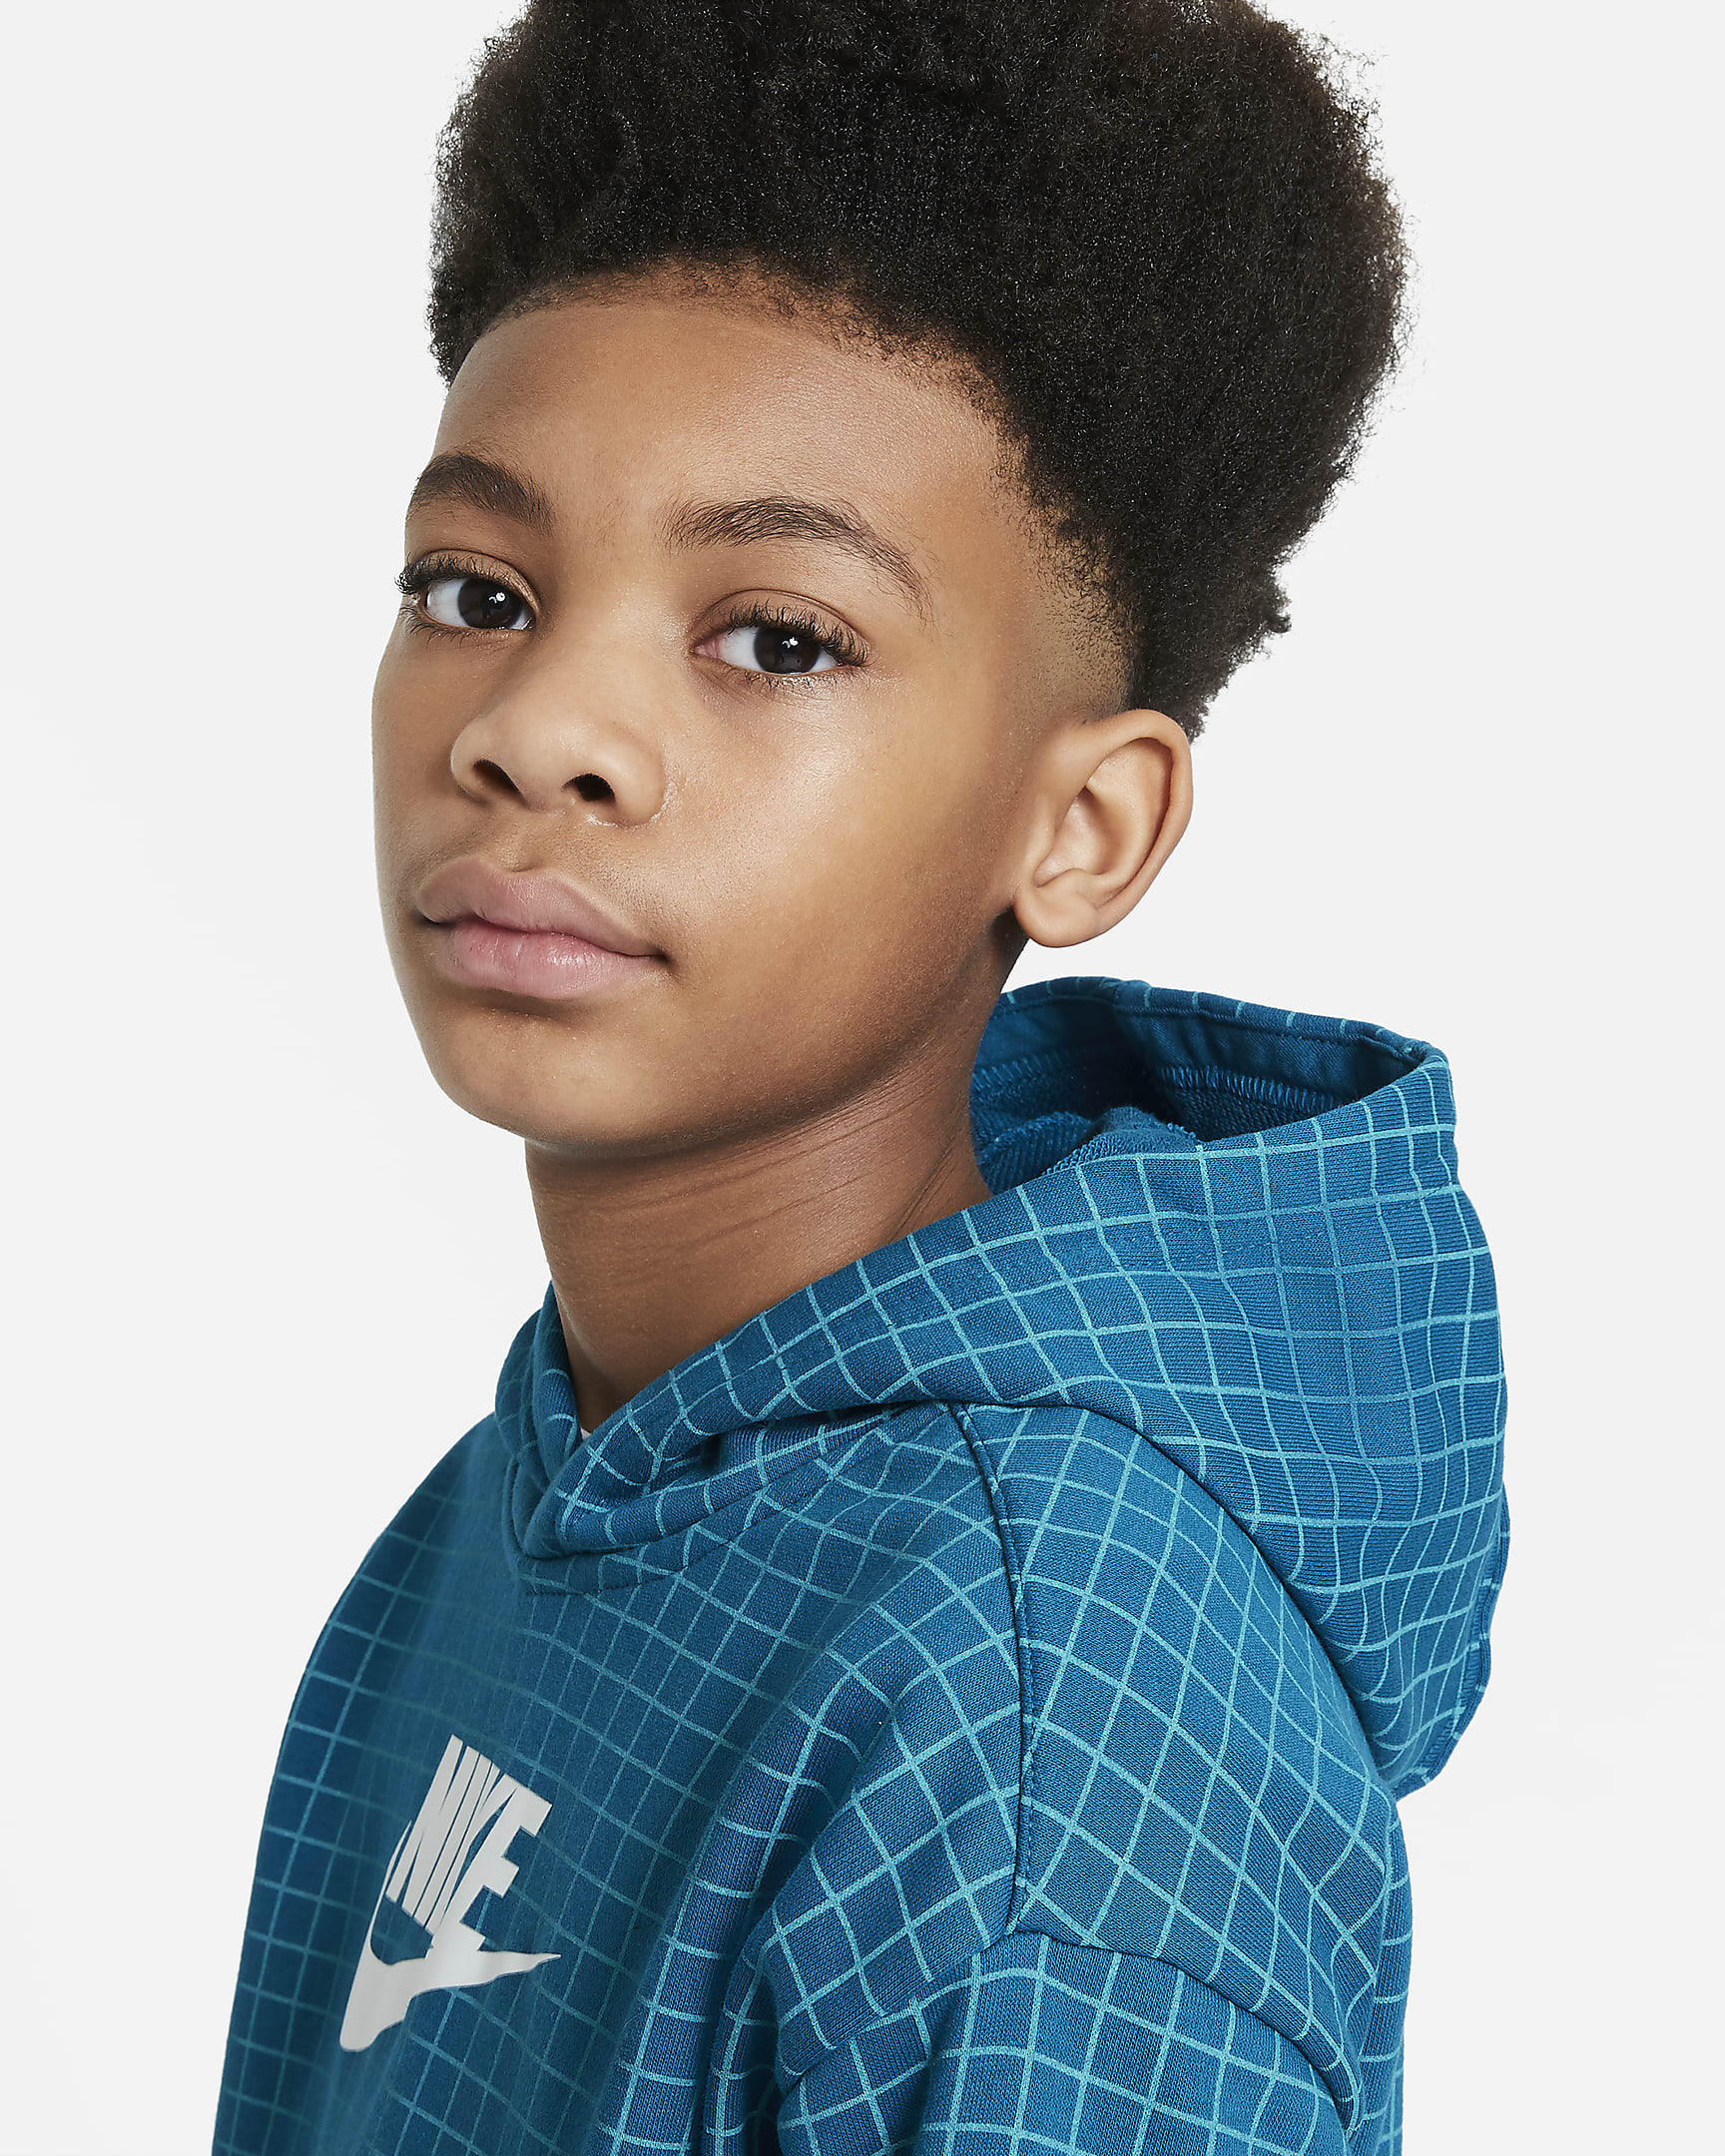 Nike Sportswear Big Kids' (Boys') Fleece Top. Nike.com